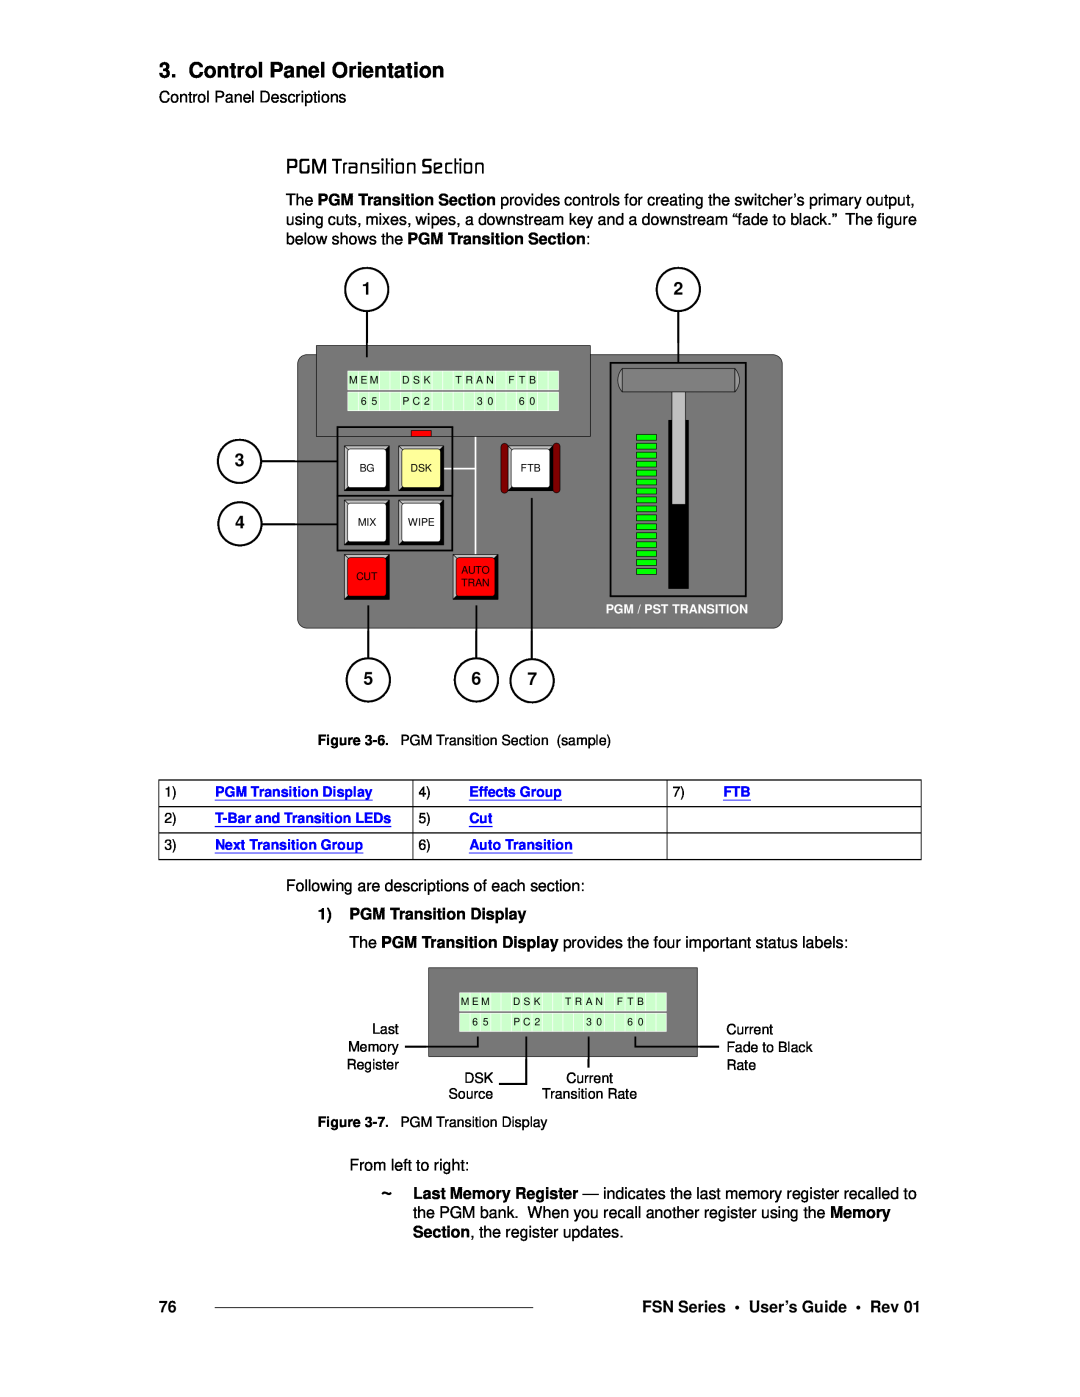 Barco 26-0702000-00 manual mdj=qê~åëáíáçå=pÉÅíáçå, 1PGM Transition Display, Control Panel Orientation 